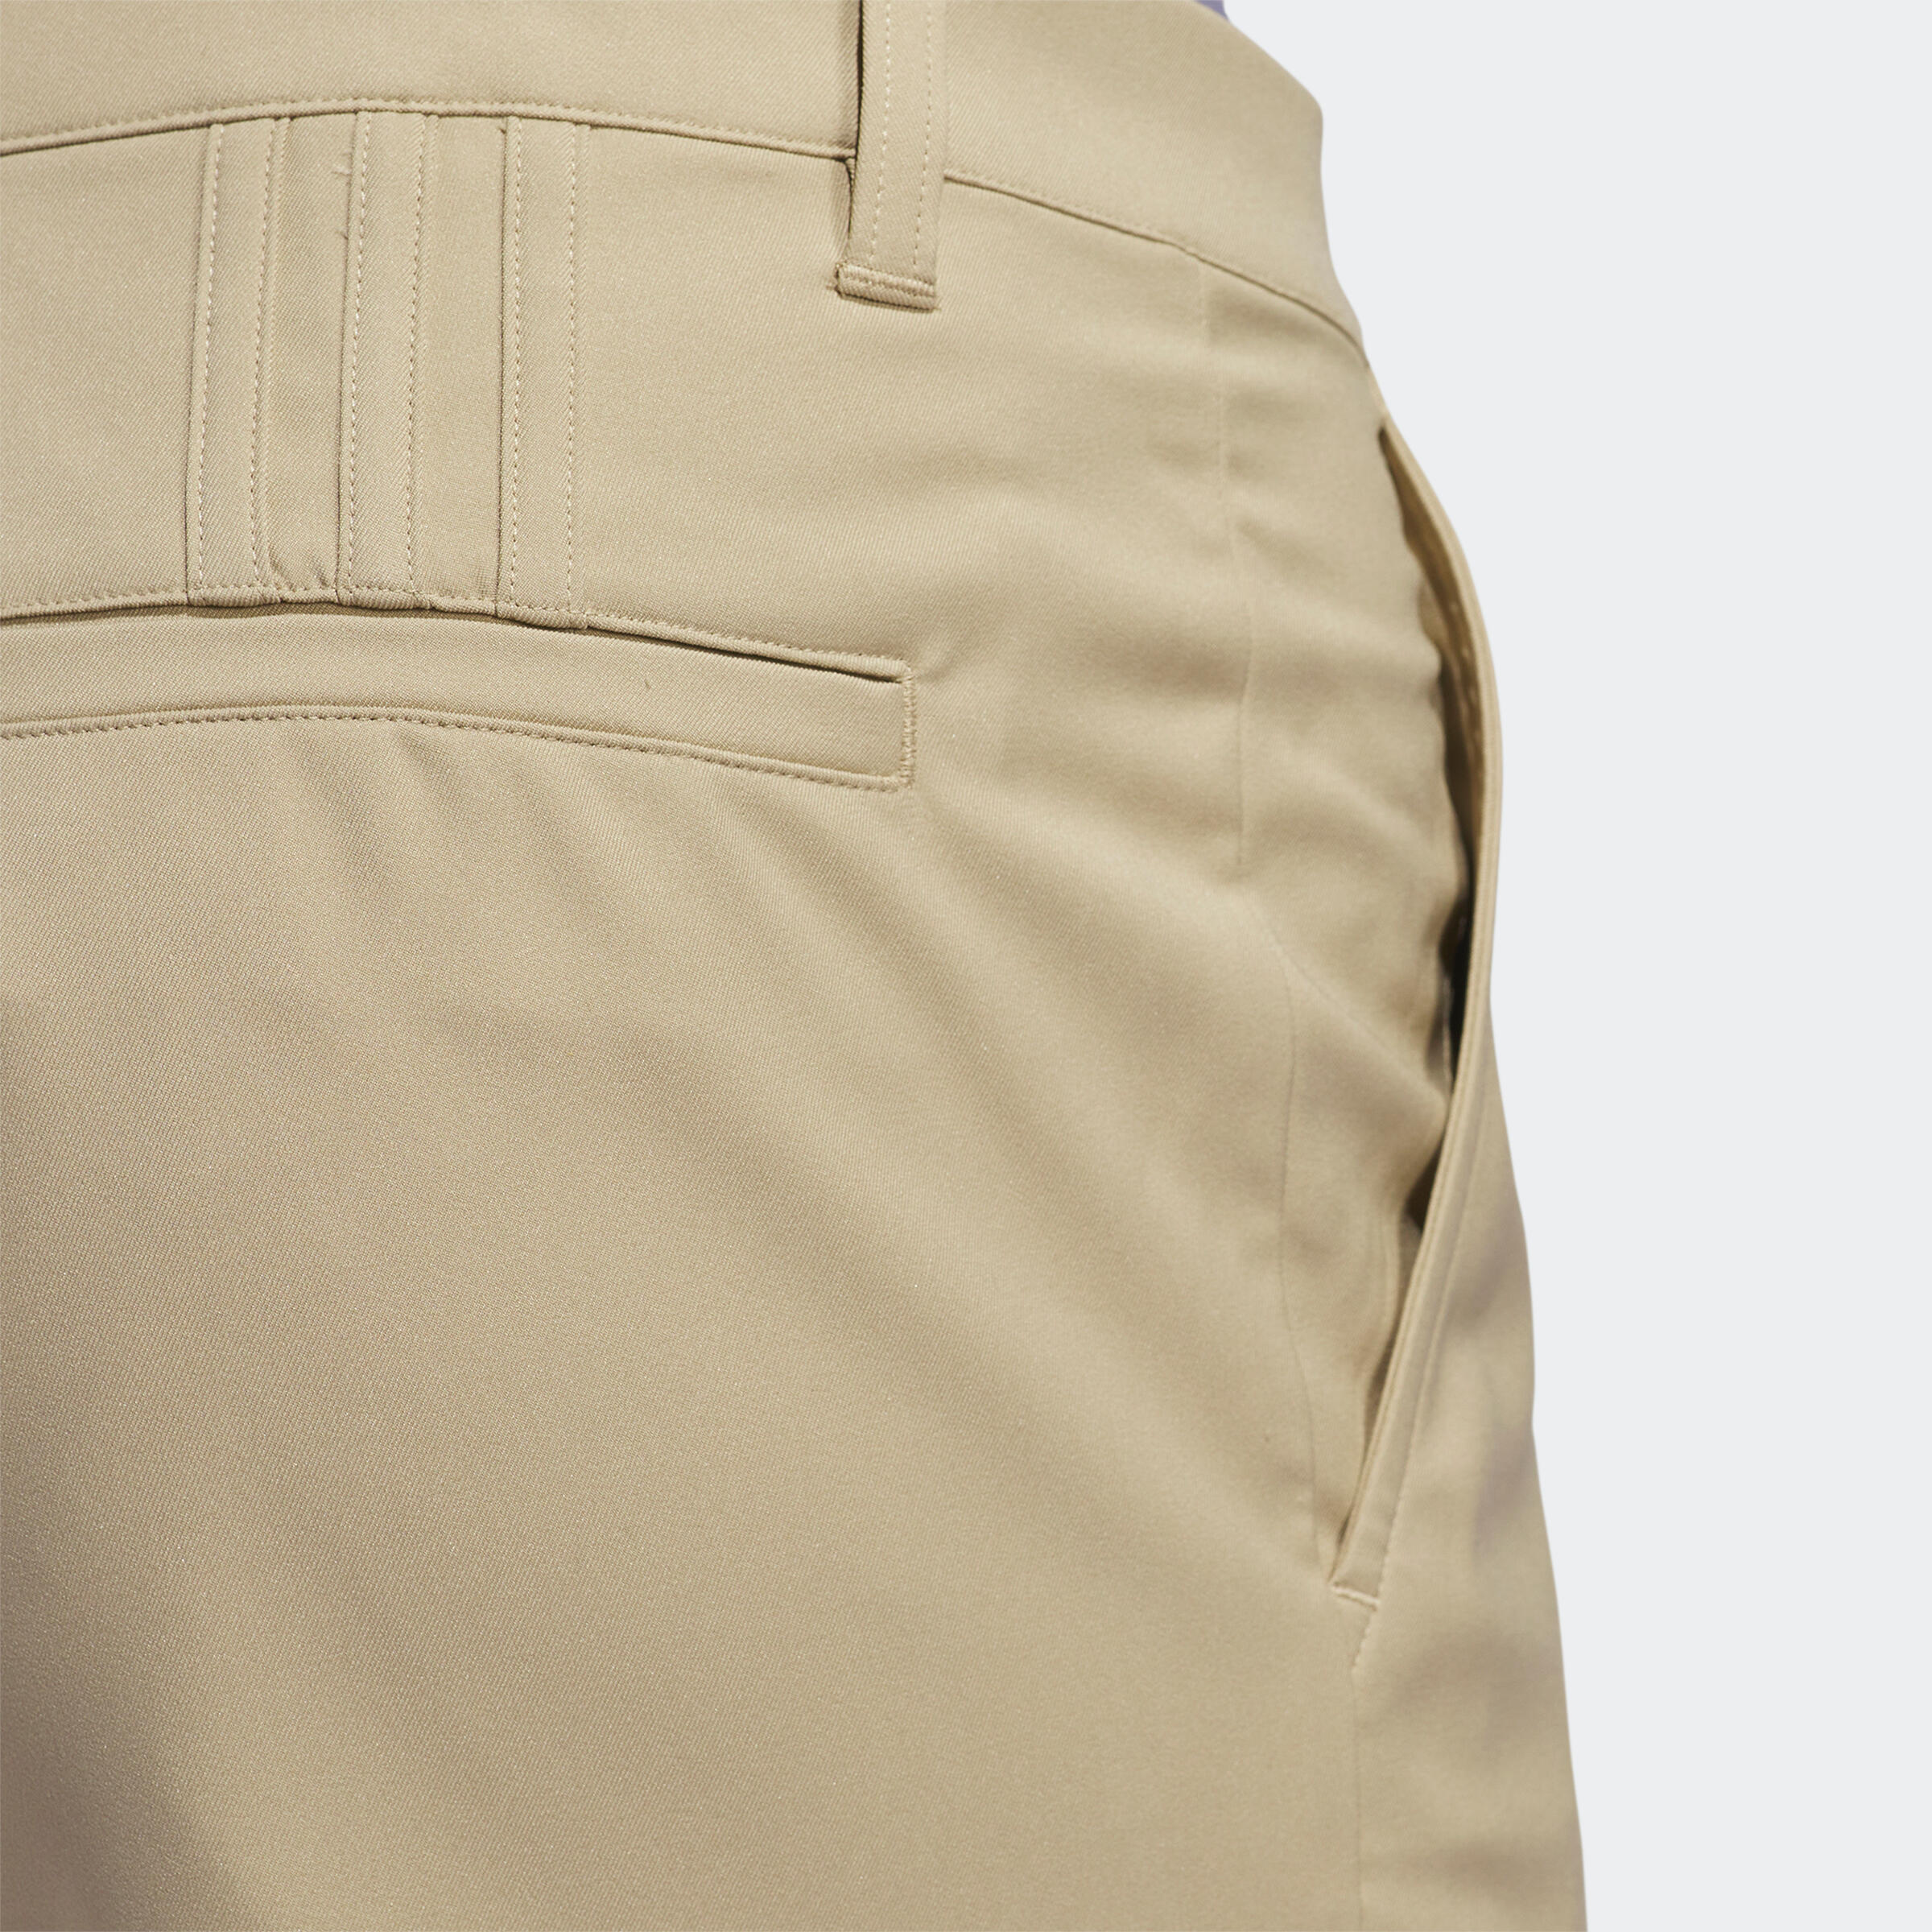 Men's golf Bermuda shorts - Adidas beige 4/4